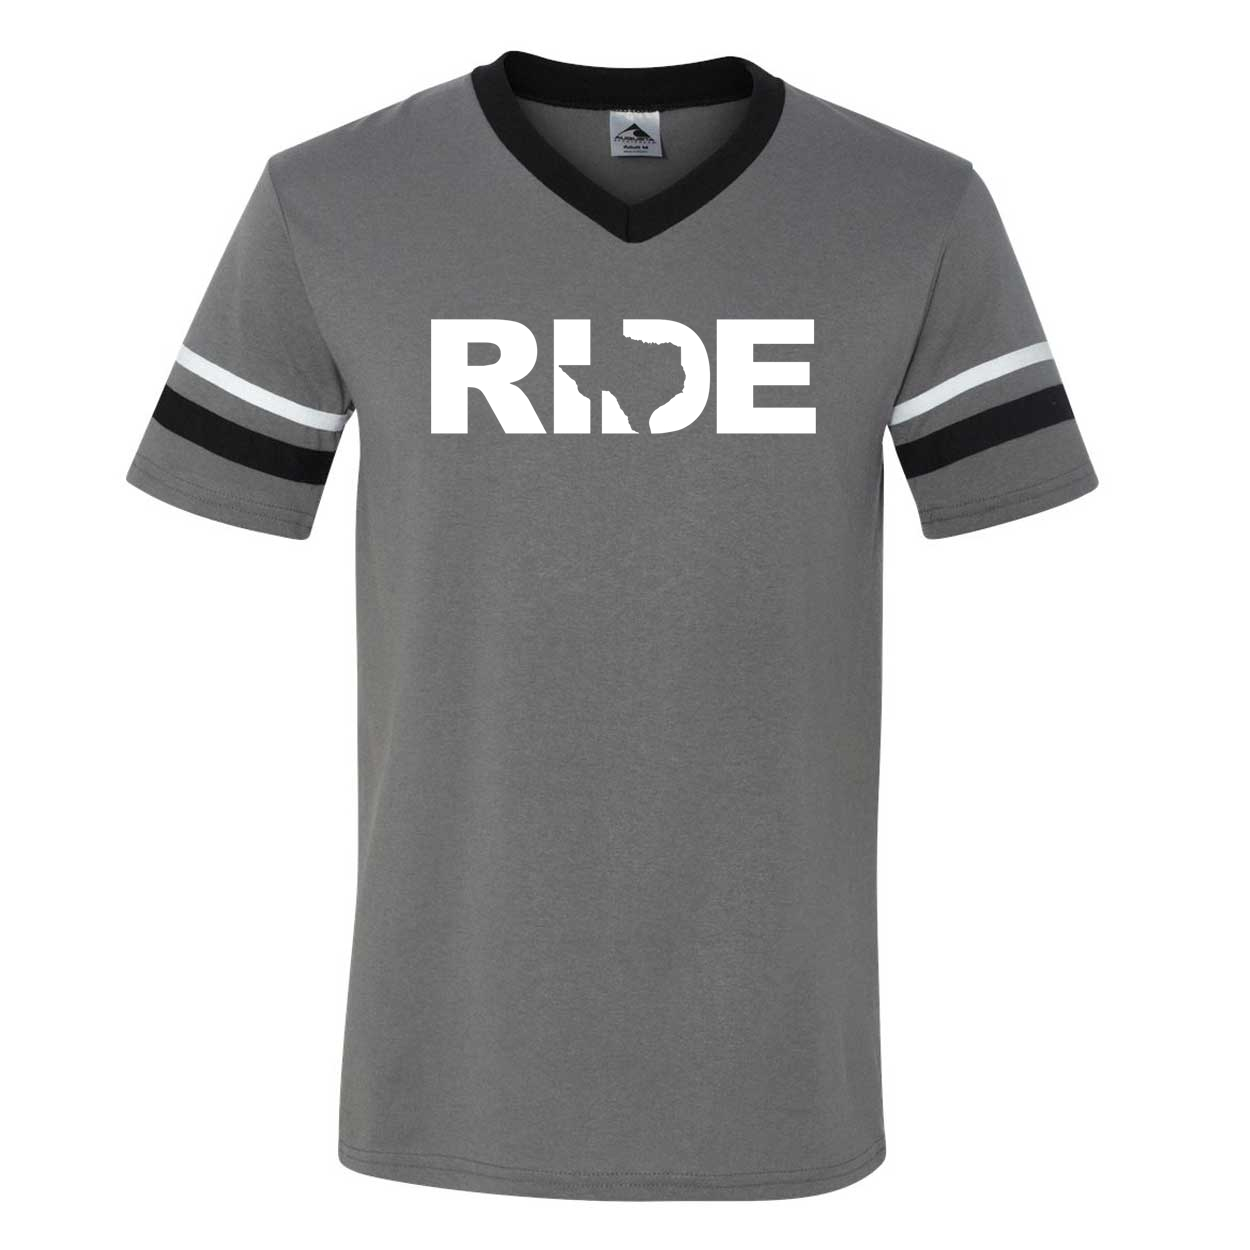 Ride Texas Classic Premium Striped Jersey T-Shirt Graphite/Black/White (White Logo)